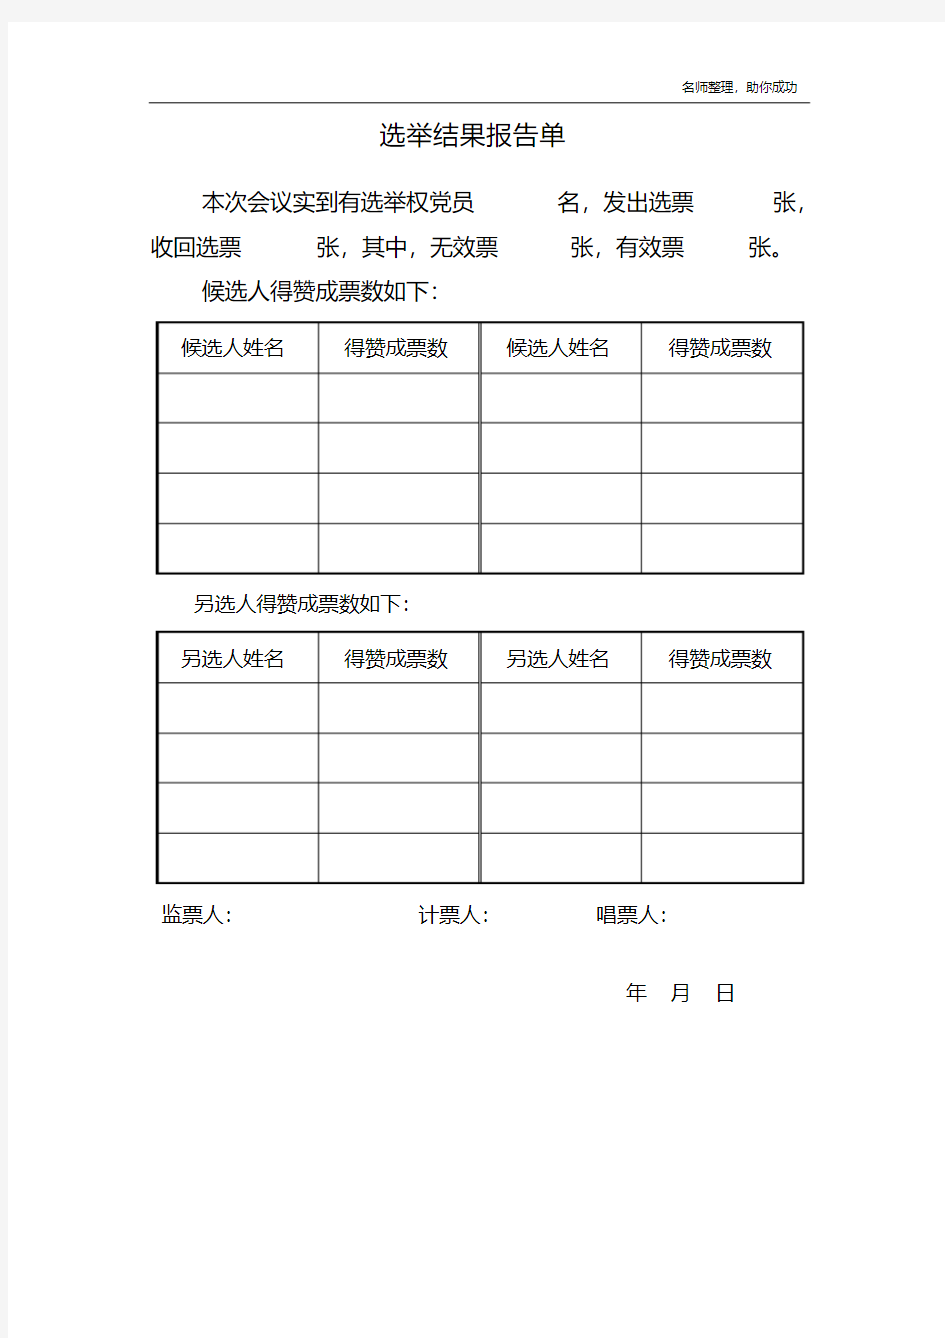 XX支部委员会选举结果报告单.pdf